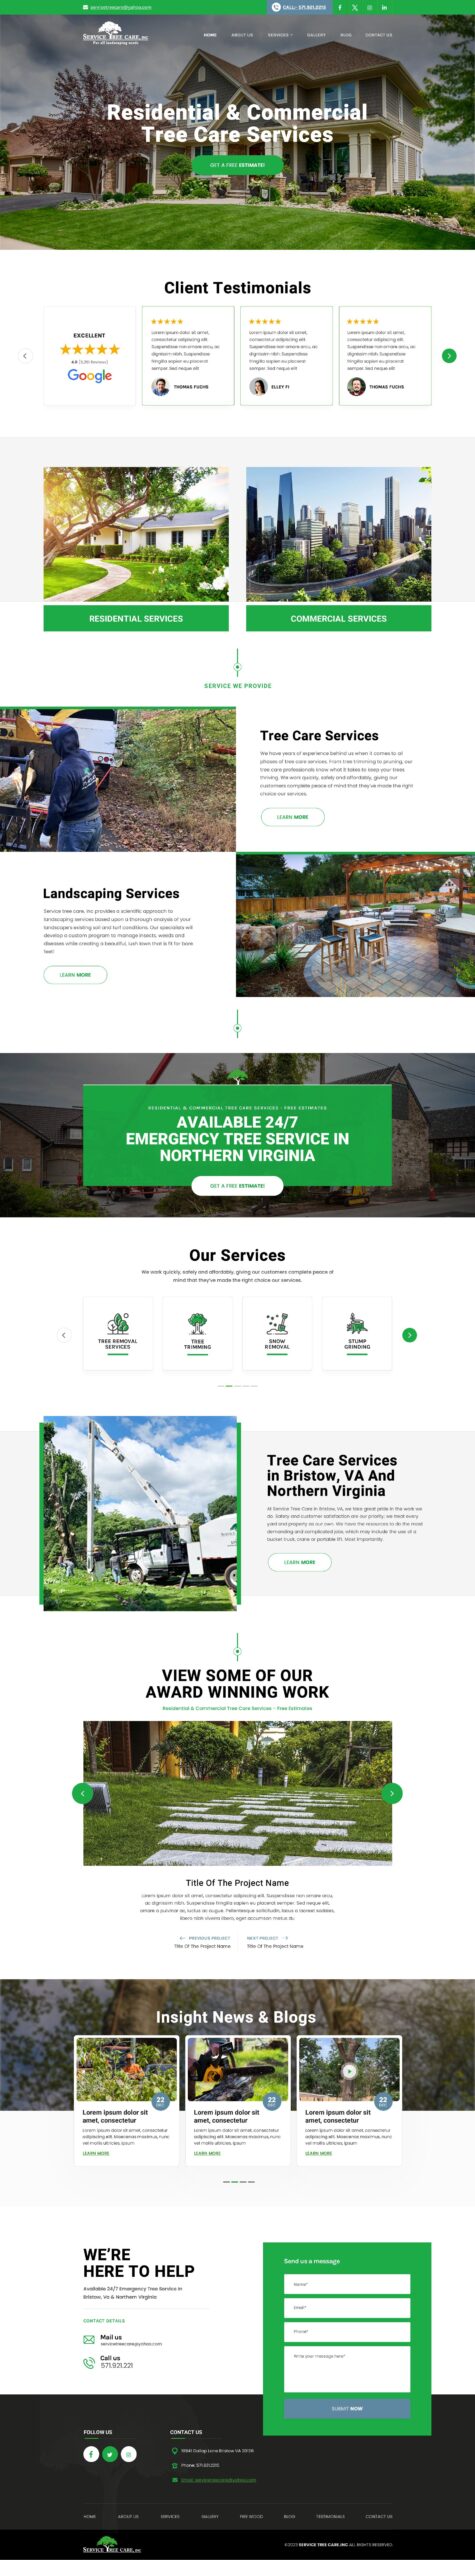 Service Tree Care, Inc.